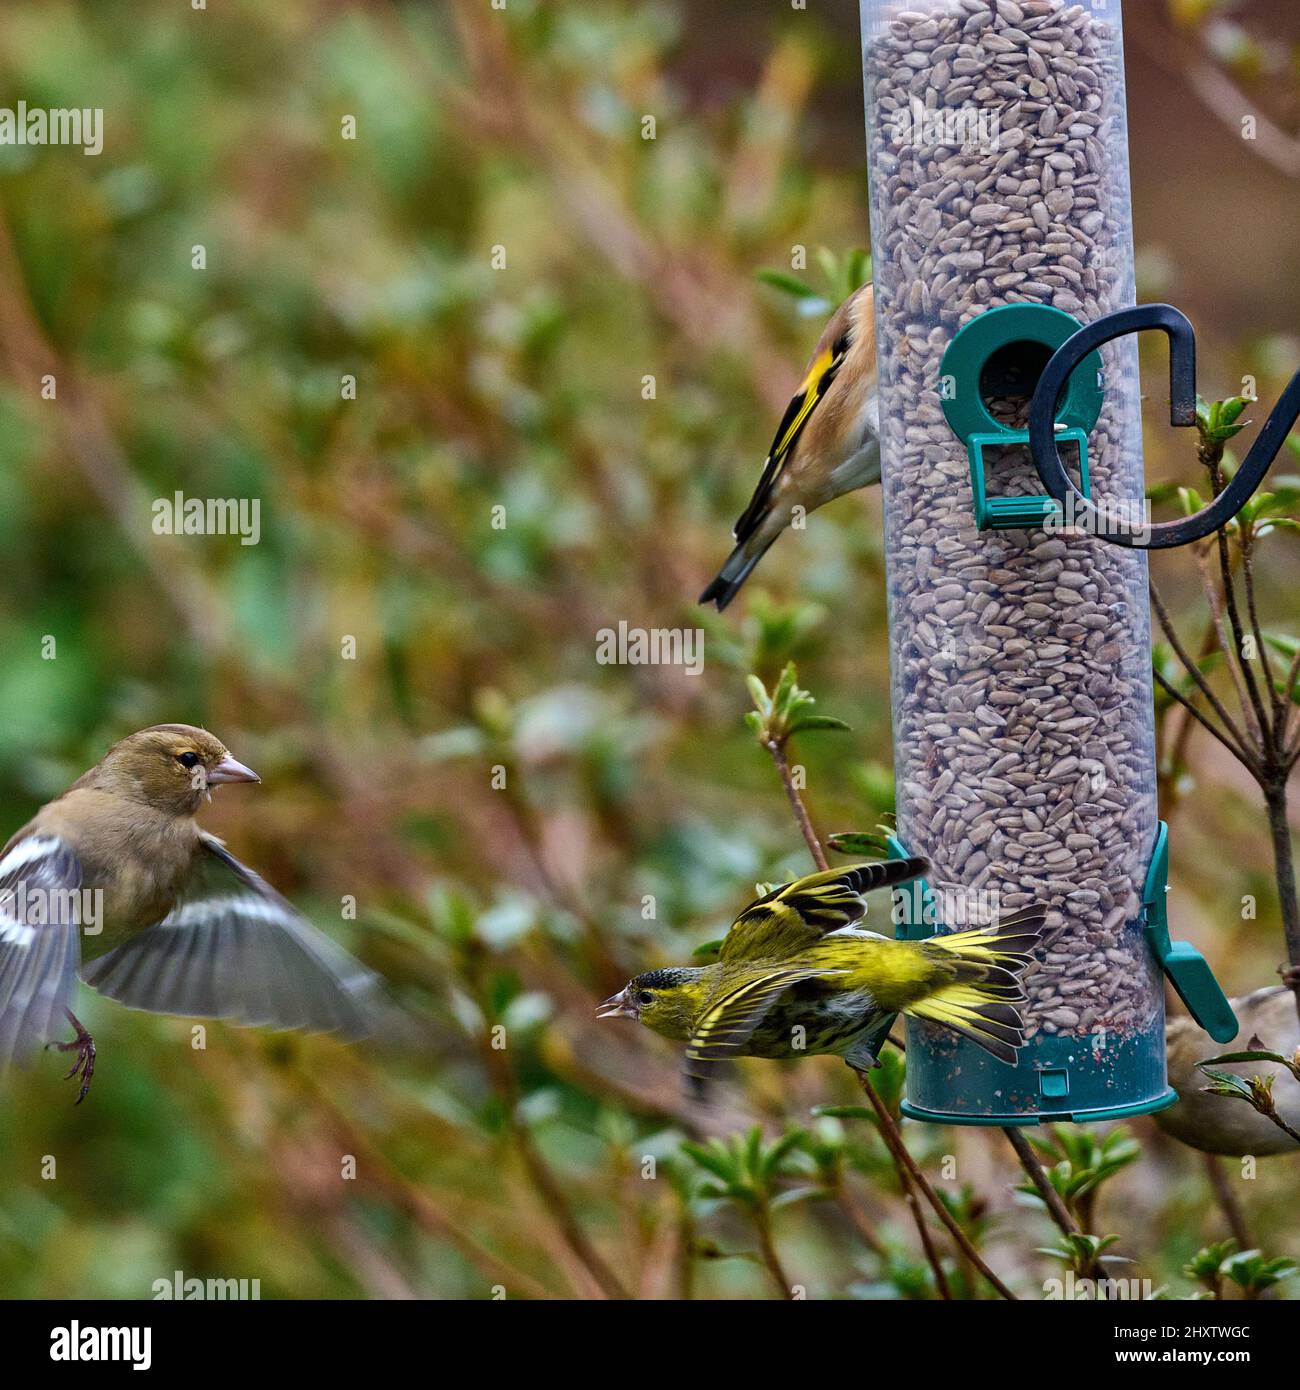 Small birds on a feeder Stock Photo